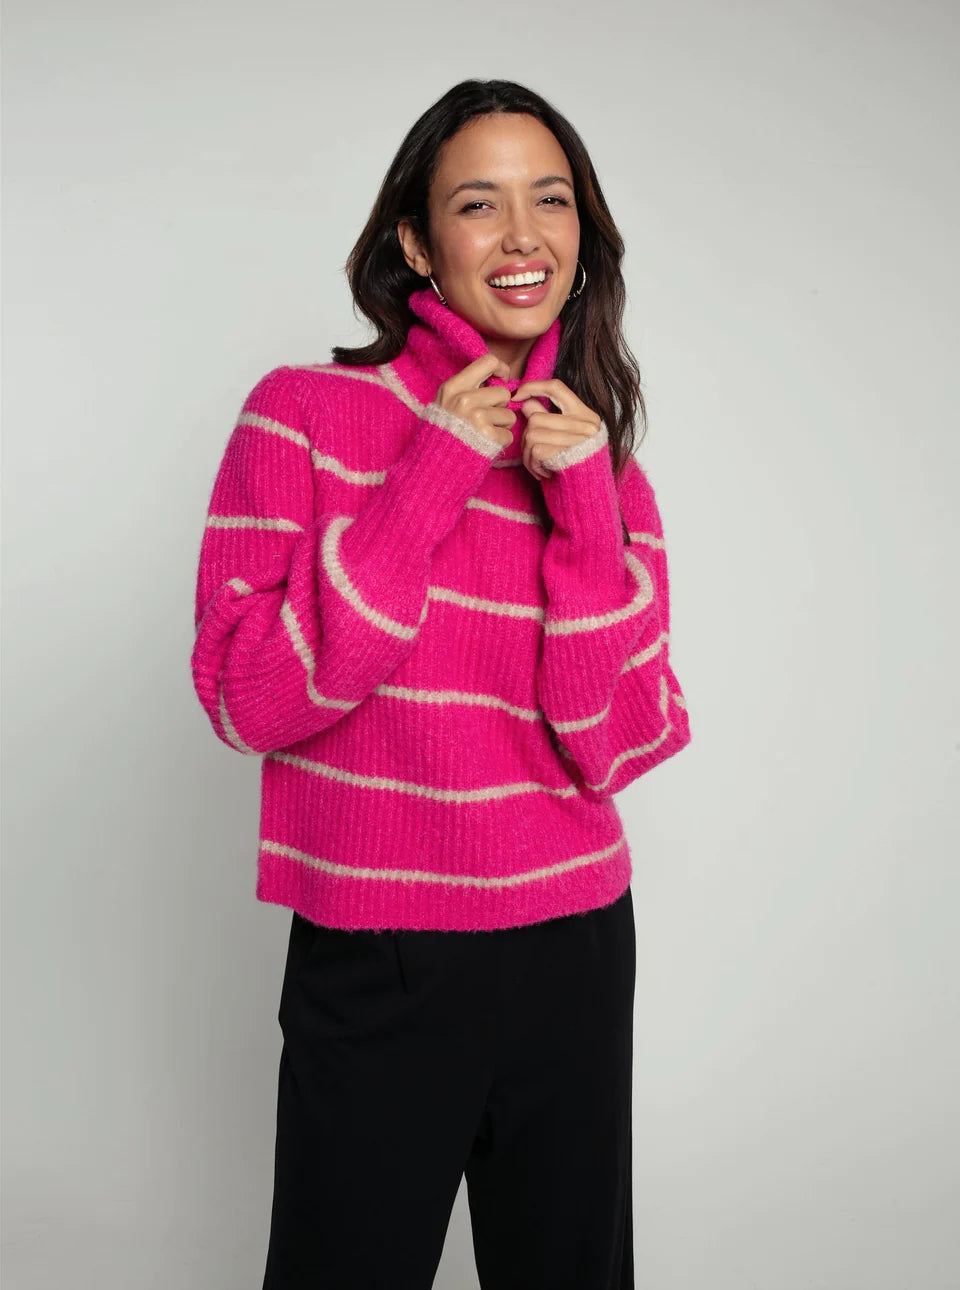 Nooki Chiara striped knit Pink